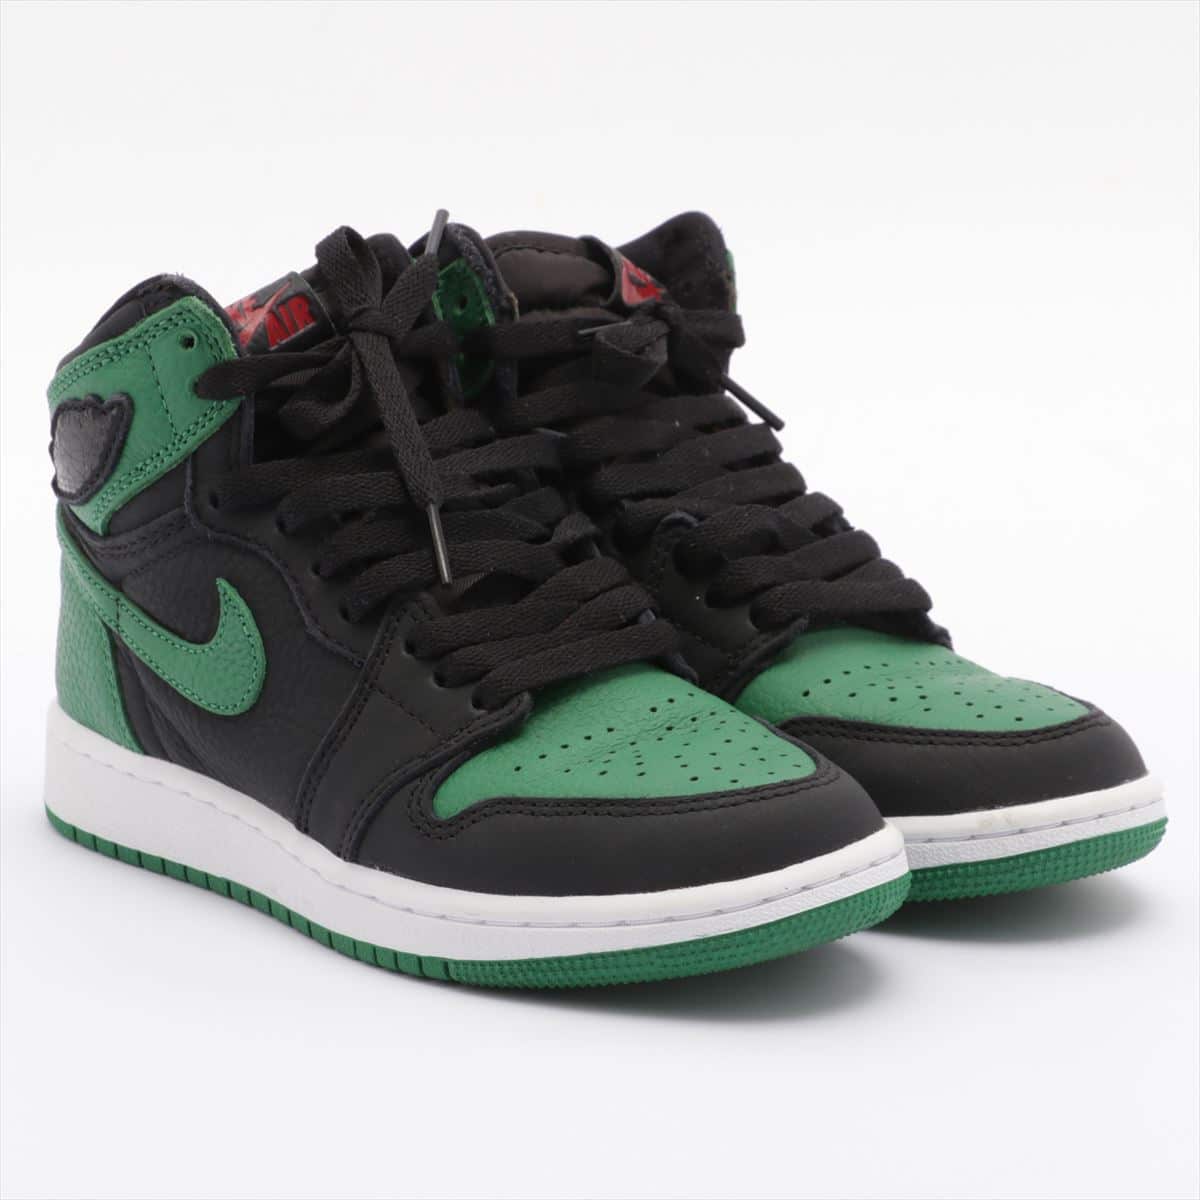 Nike AIR JORDAN 1 RETRO HIGH OG Suede Sneakers 22.5 Kids Green x black 555088-030